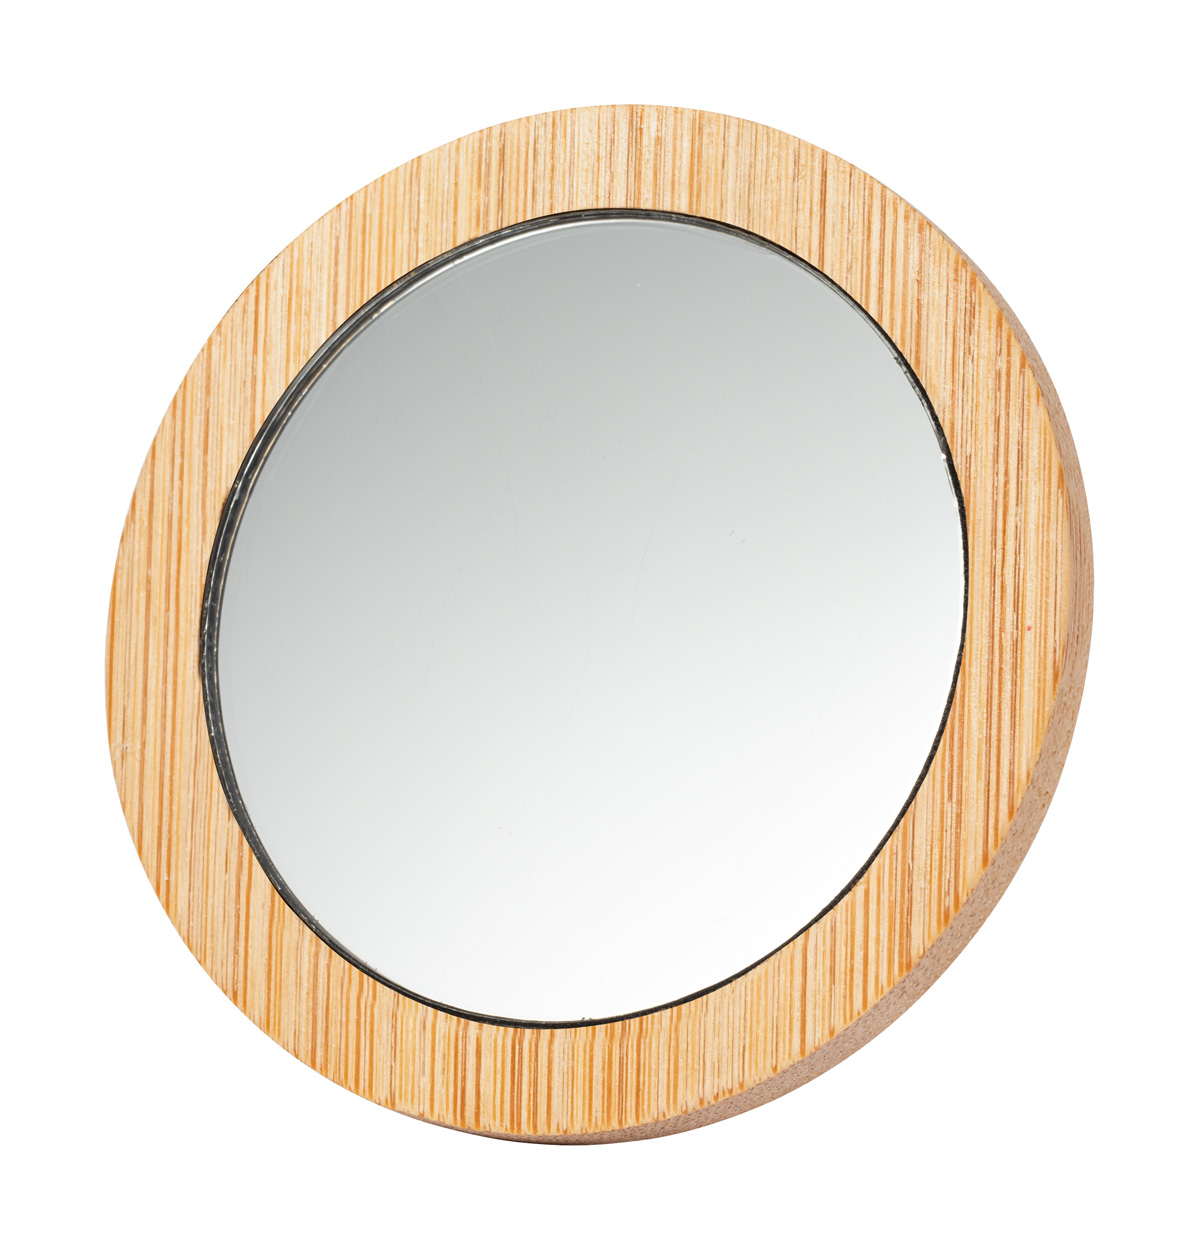 Arendel pocket mirror - beige